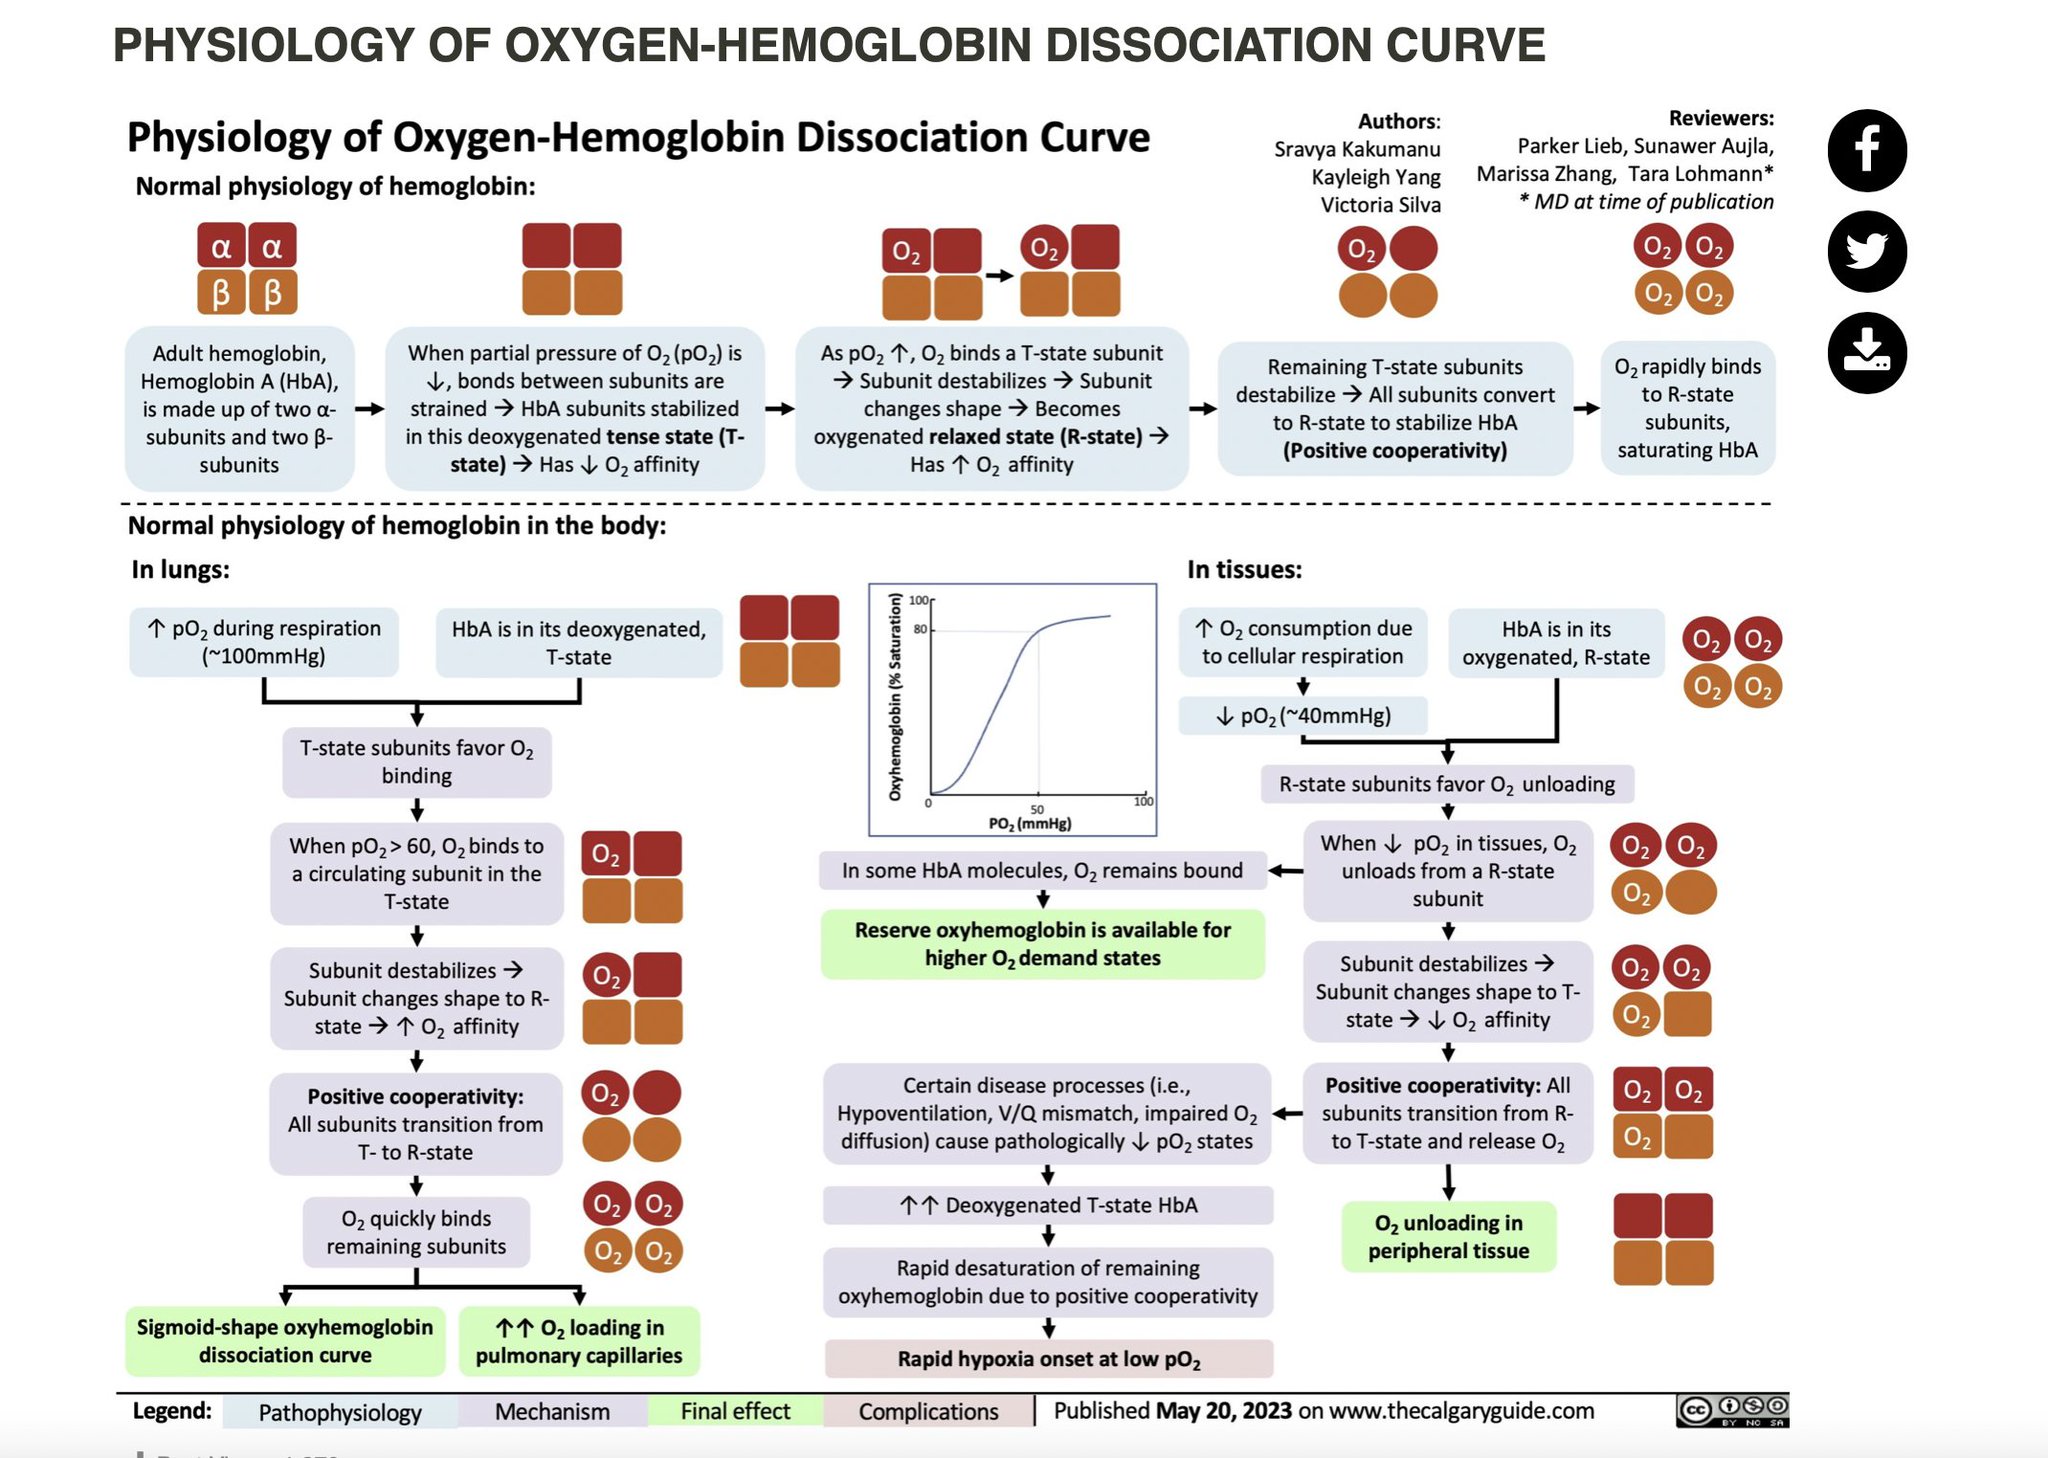 Aaron Goodman - “Papa Heme” on X: Hemoglobin Dissociation Curve